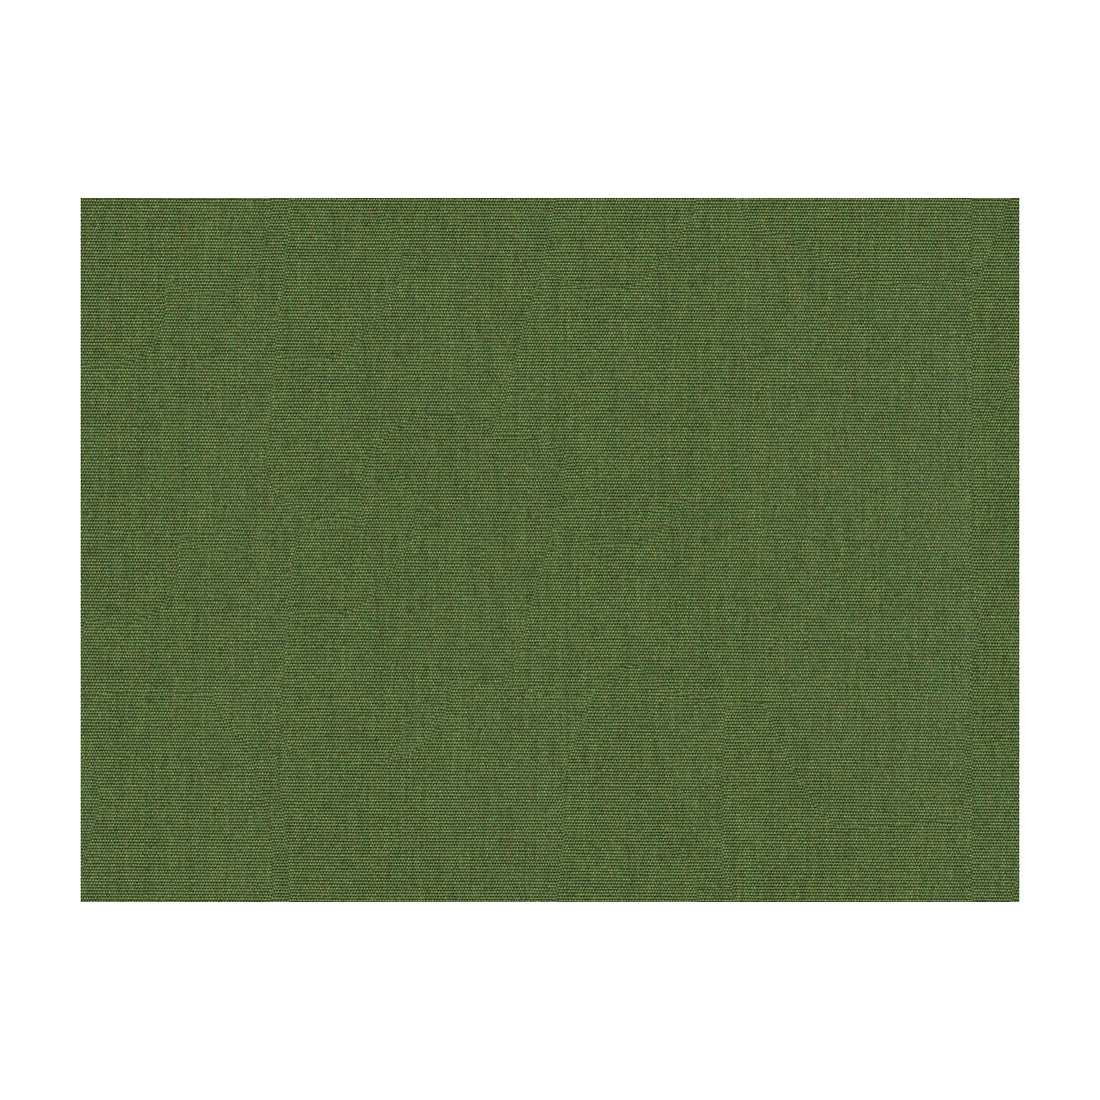 Kravet Smart fabric in 33383-33 color - pattern 33383.33.0 - by Kravet Smart in the Soleil collection